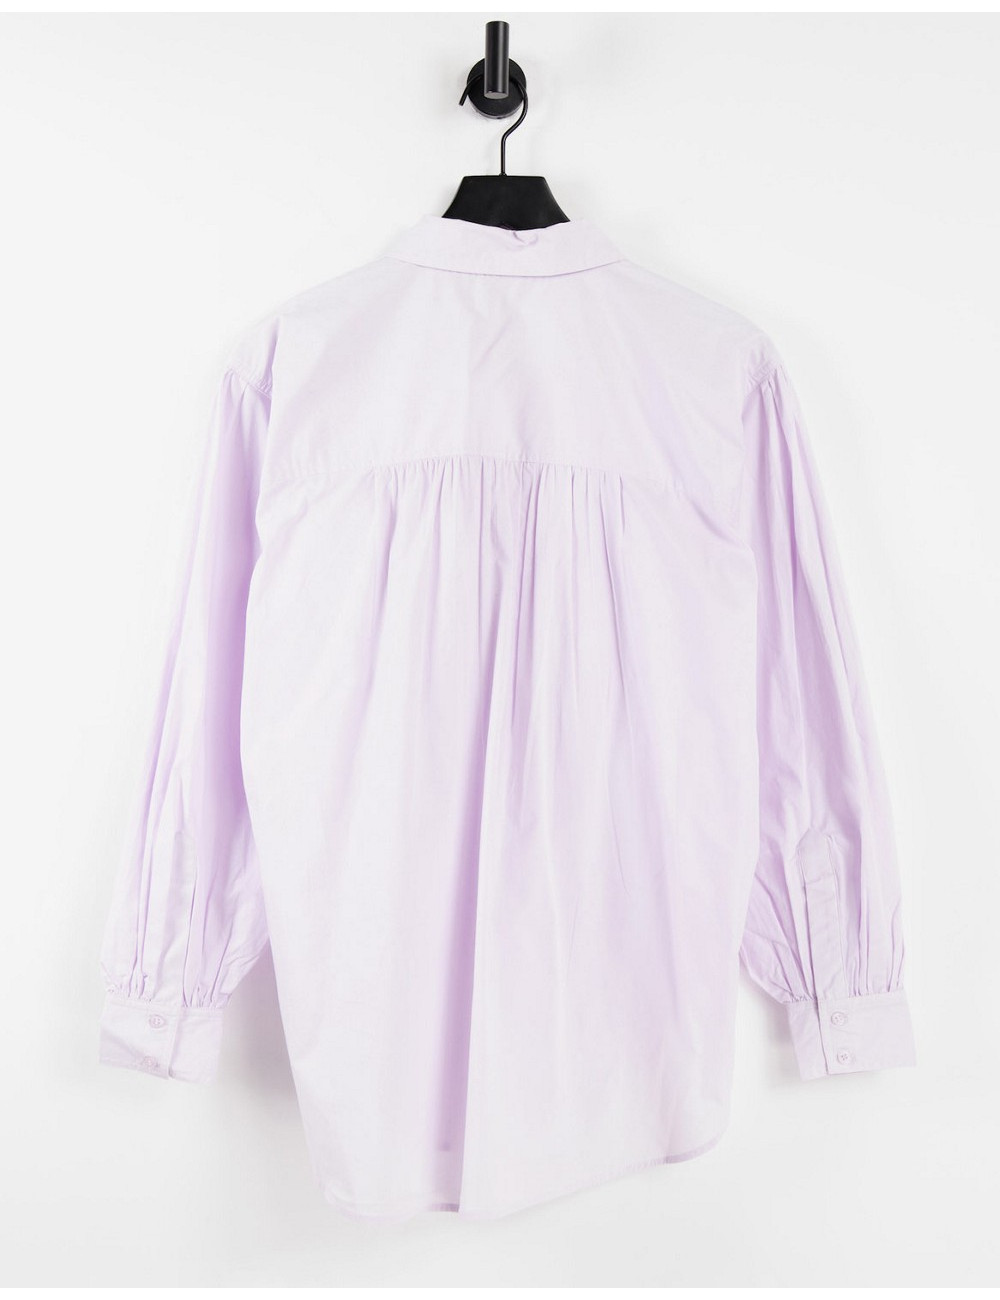 New Look poplin shirt in lilac